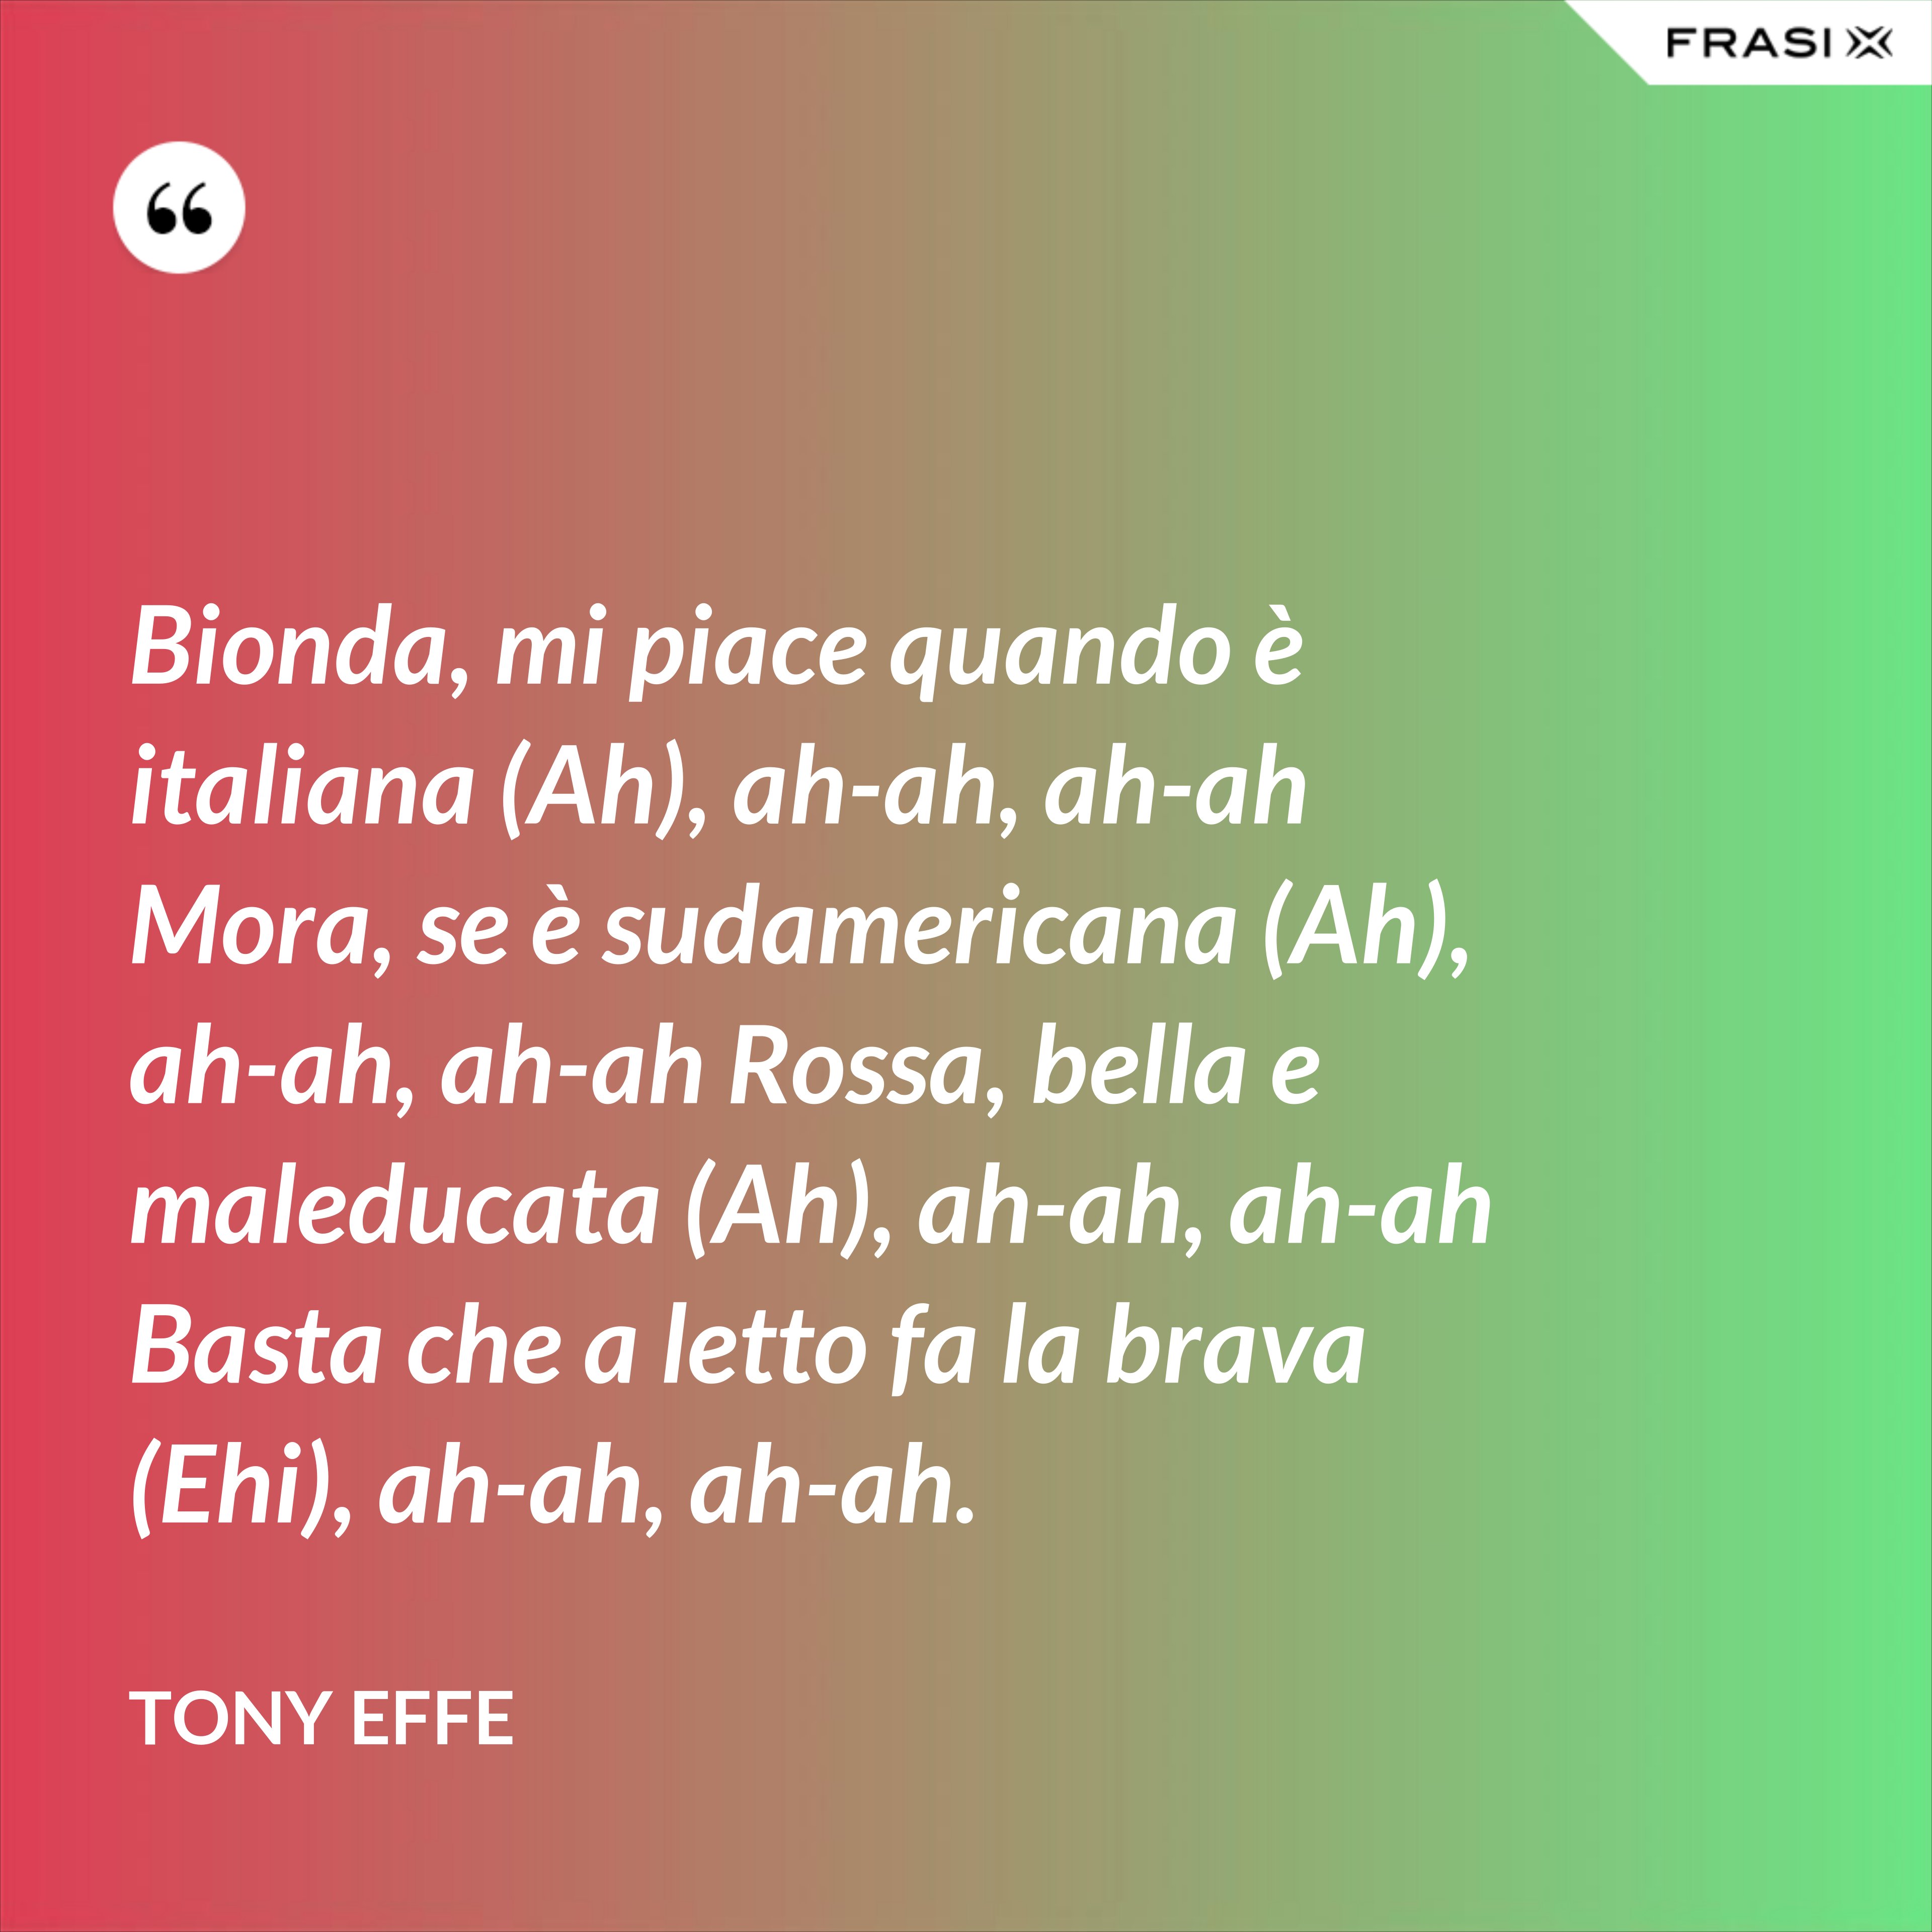 Bionda, mi piace quando è italiana (Ah), ah-ah, ah-ah Mora, se è sudamericana (Ah), ah-ah, ah-ah Rossa, bella e maleducata (Ah), ah-ah, ah-ah Basta che a letto fa la brava (Ehi), ah-ah, ah-ah. - Tony Effe